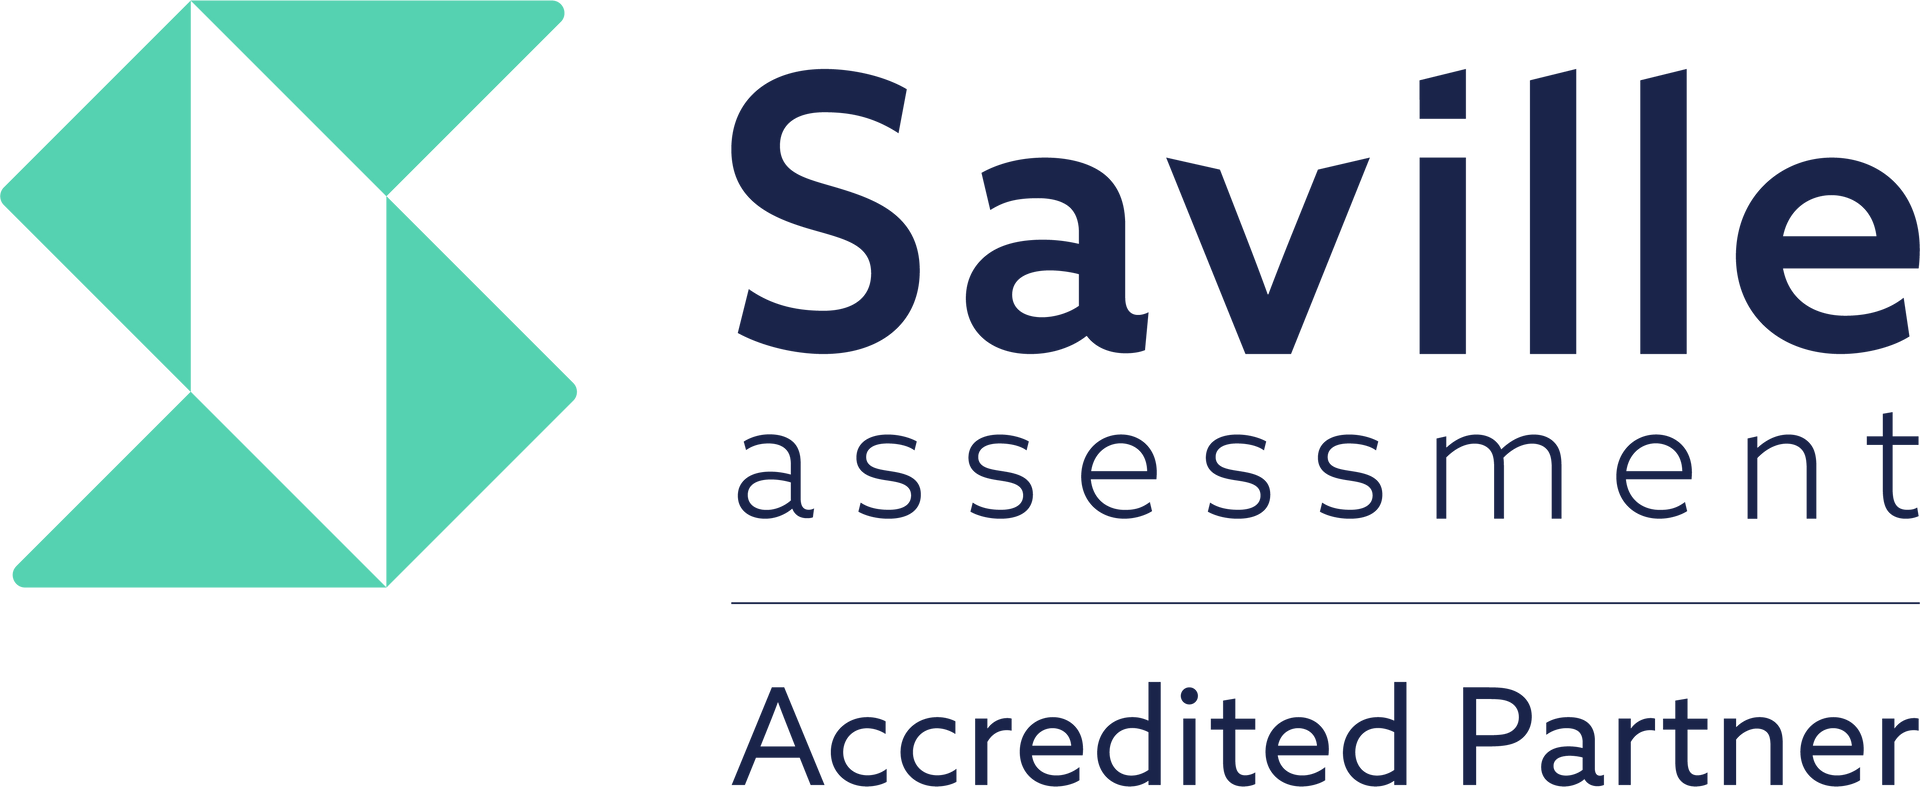 Saville assessment